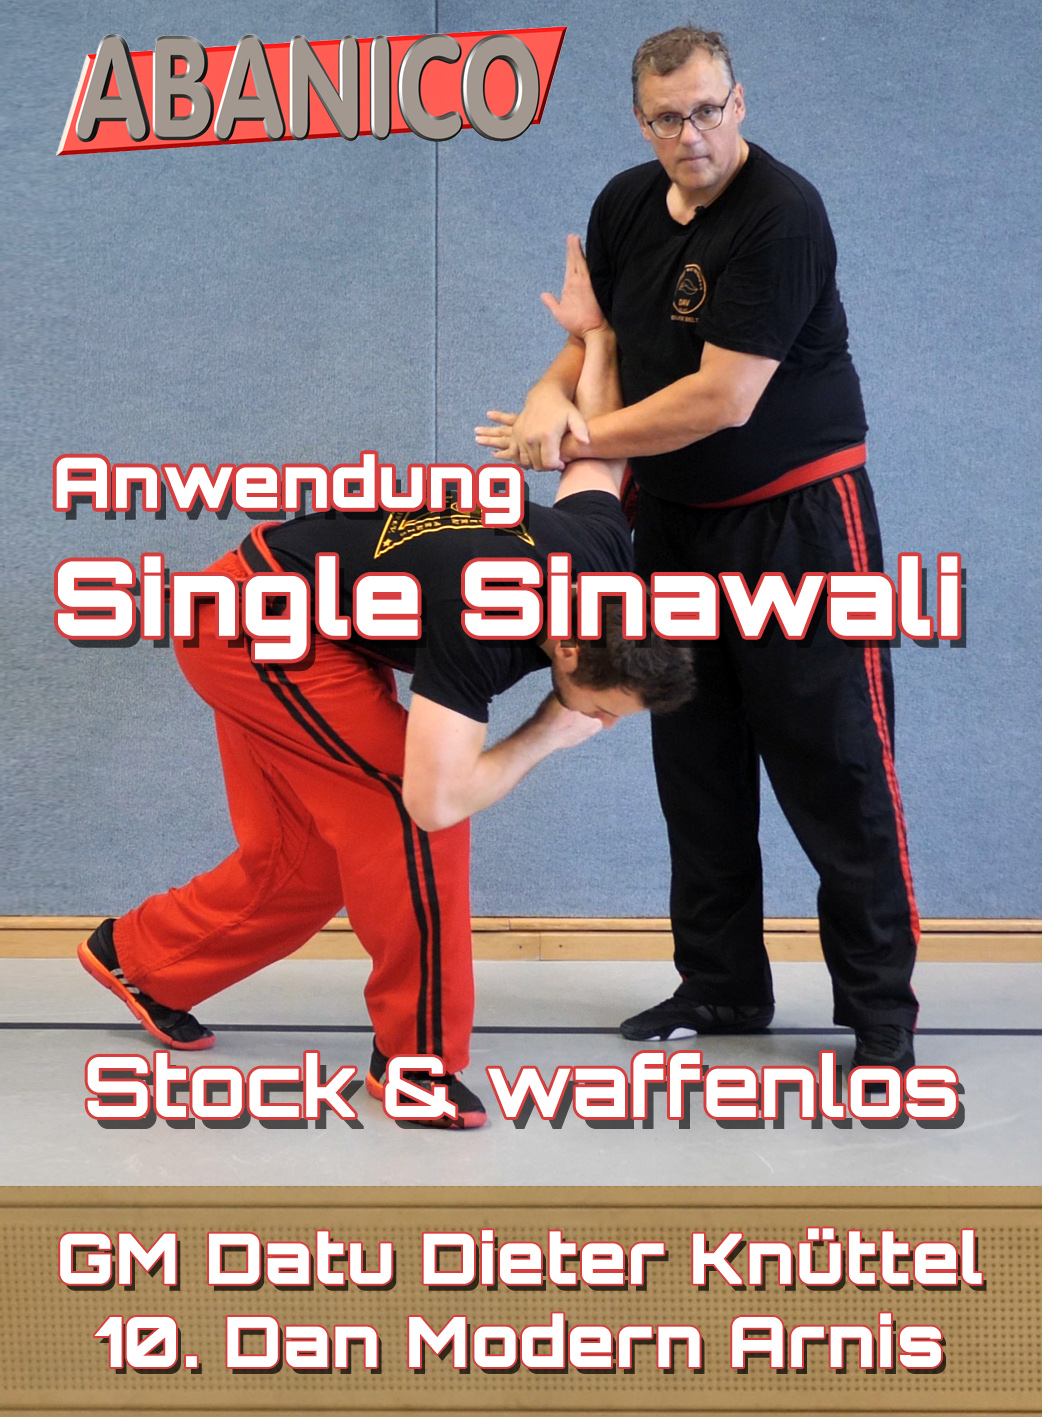 Arnis single sinawali steps